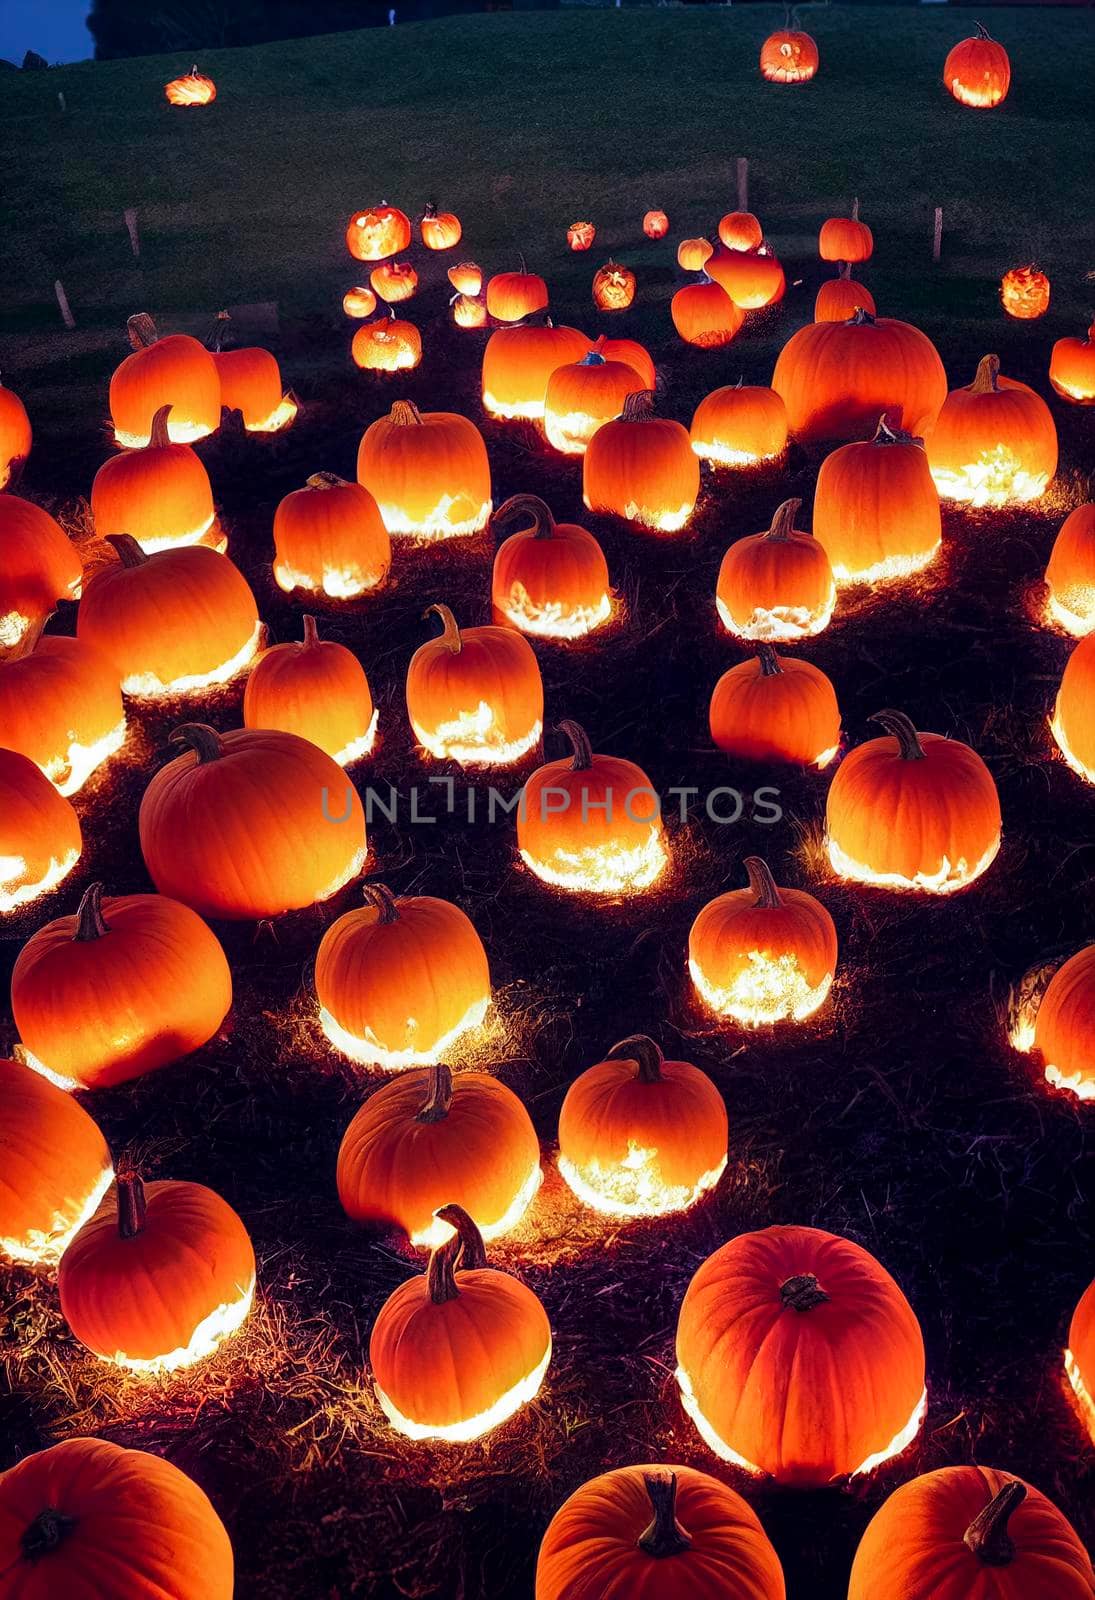 Pumpkins In Graveyard In The Spooky Night - Halloween Backdrop. by jbruiz78